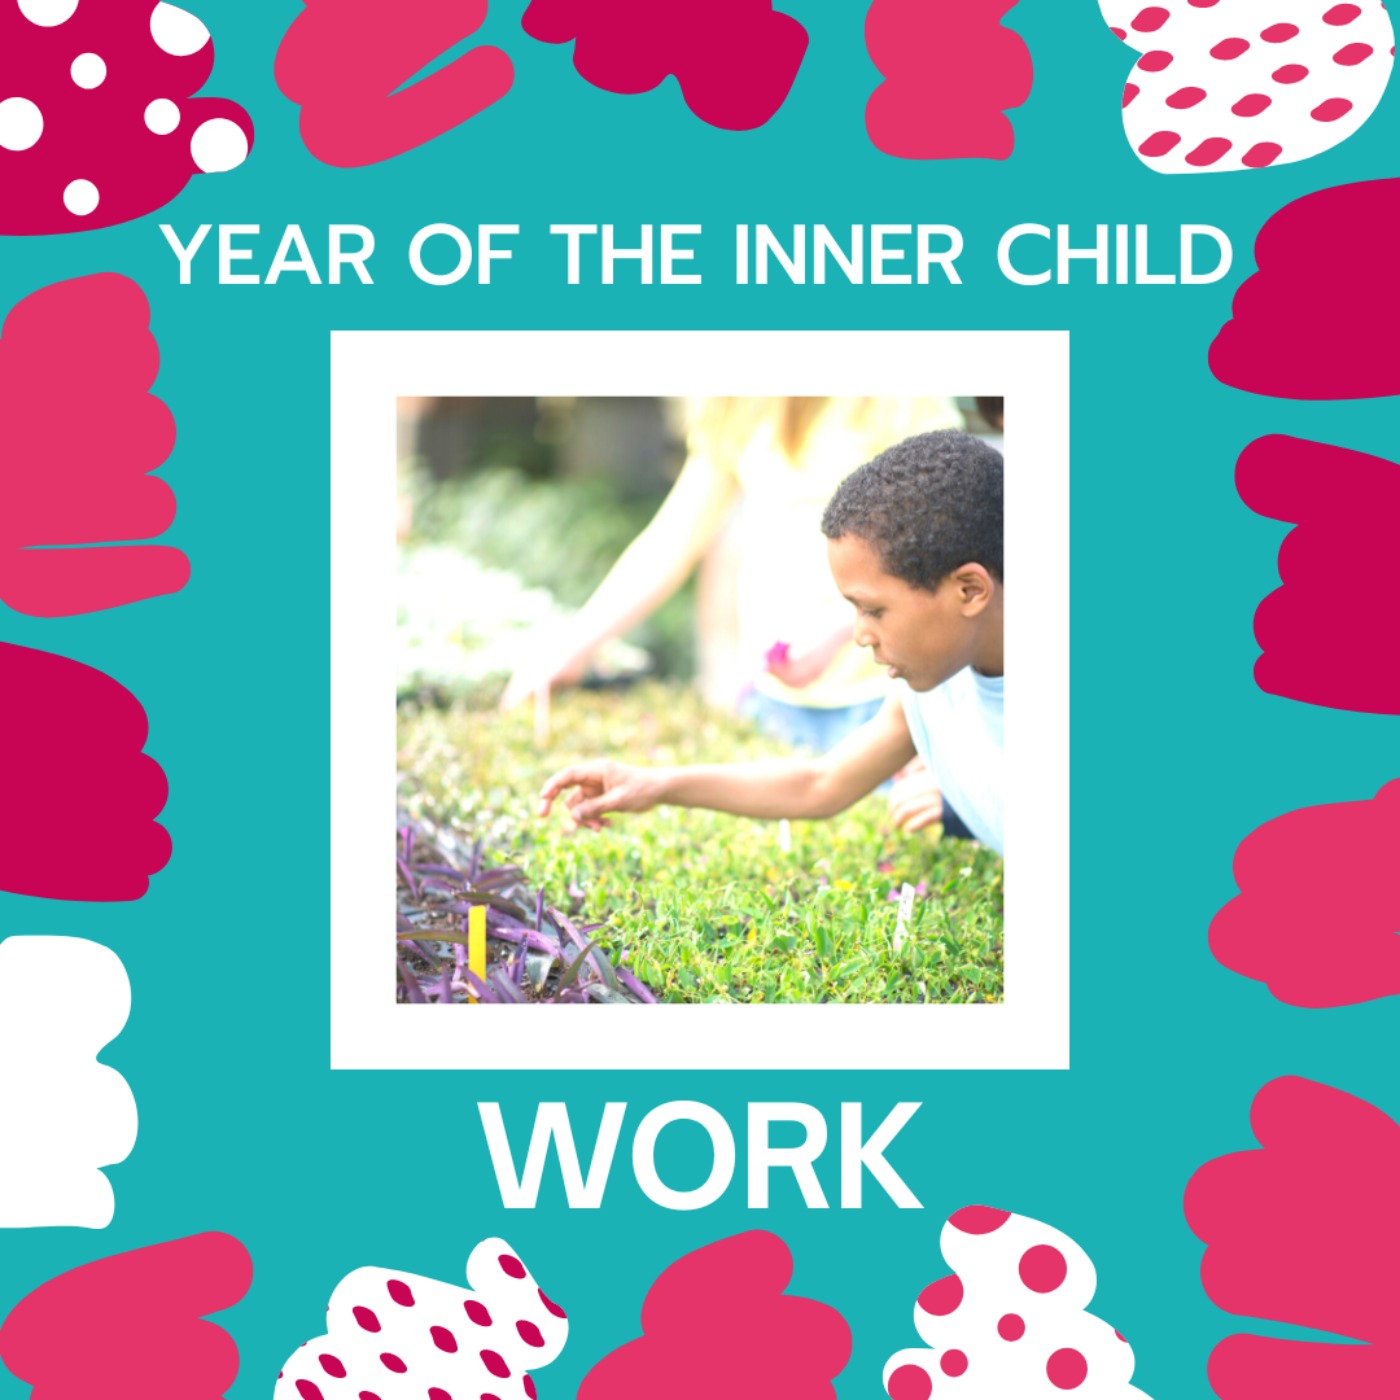 Year of the Inner Child: Work